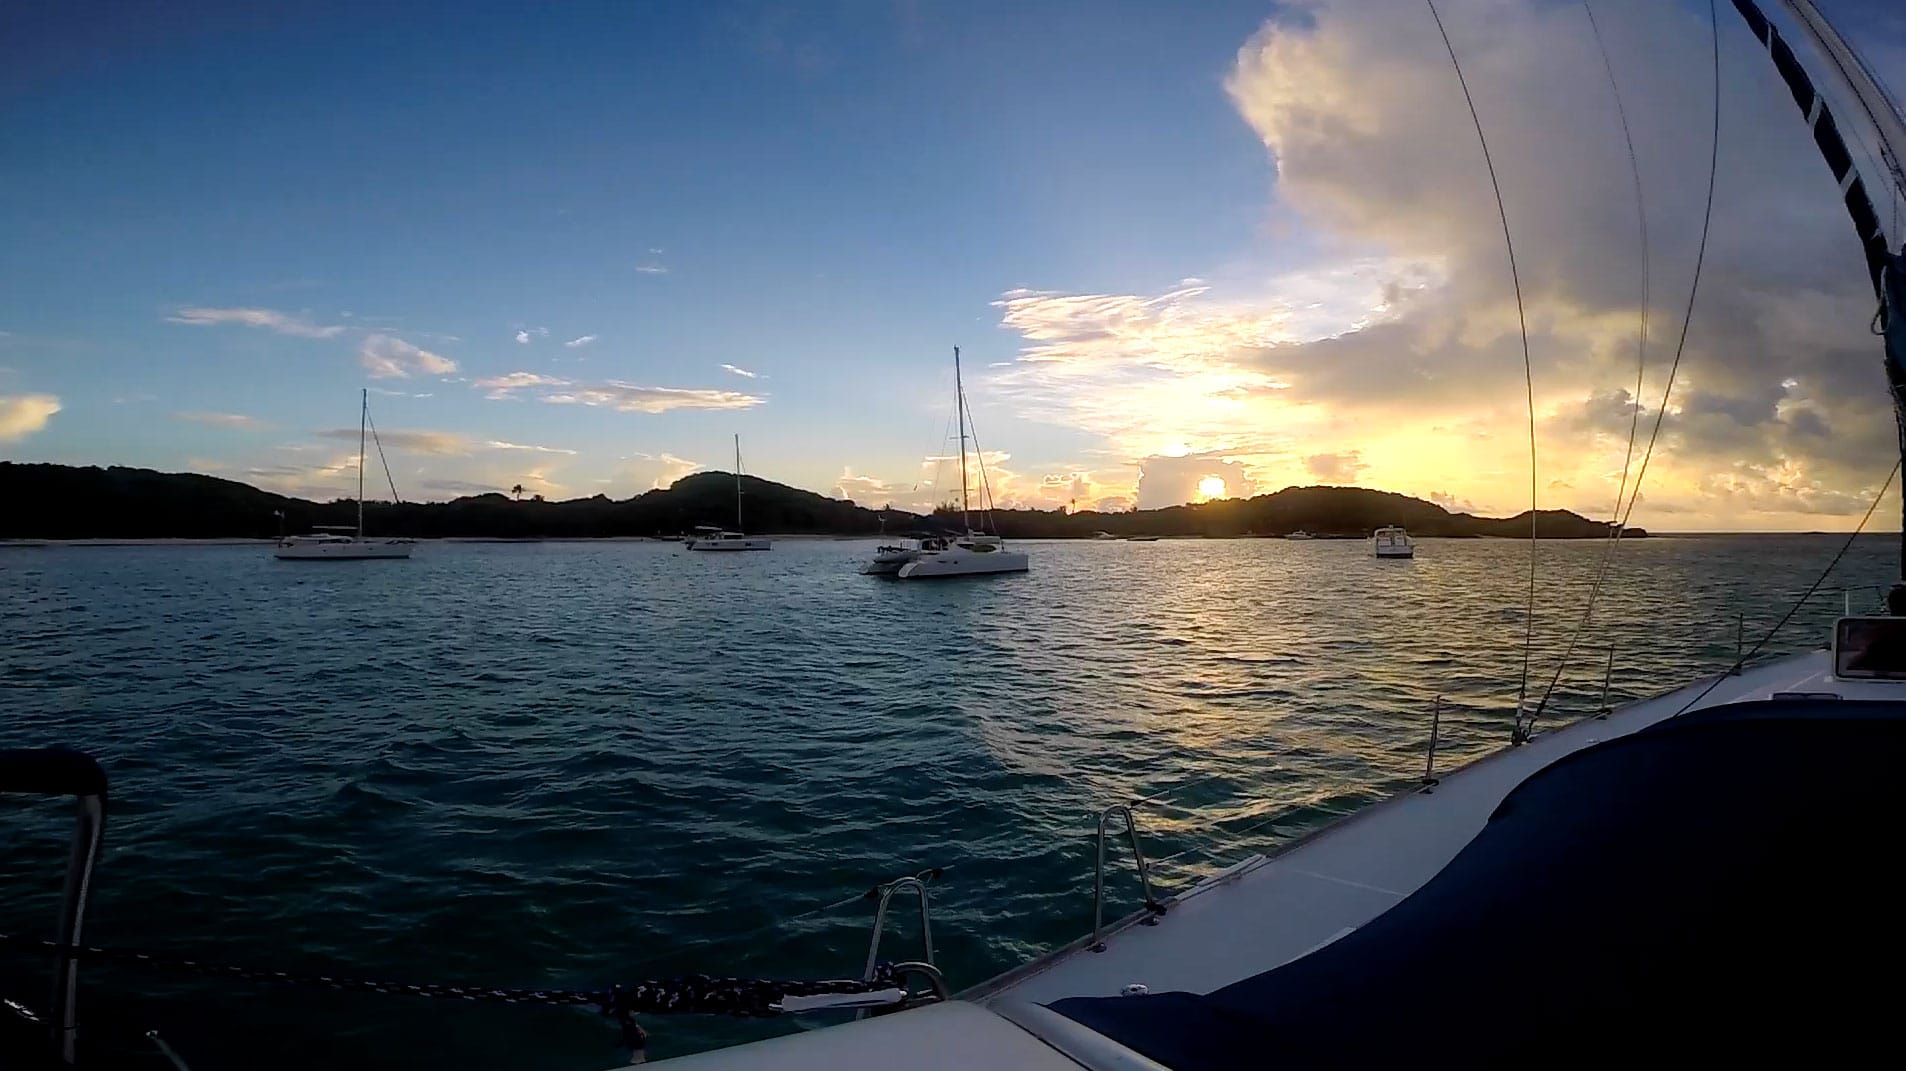 Grenadines Sailing Escape by Patrick Bennett